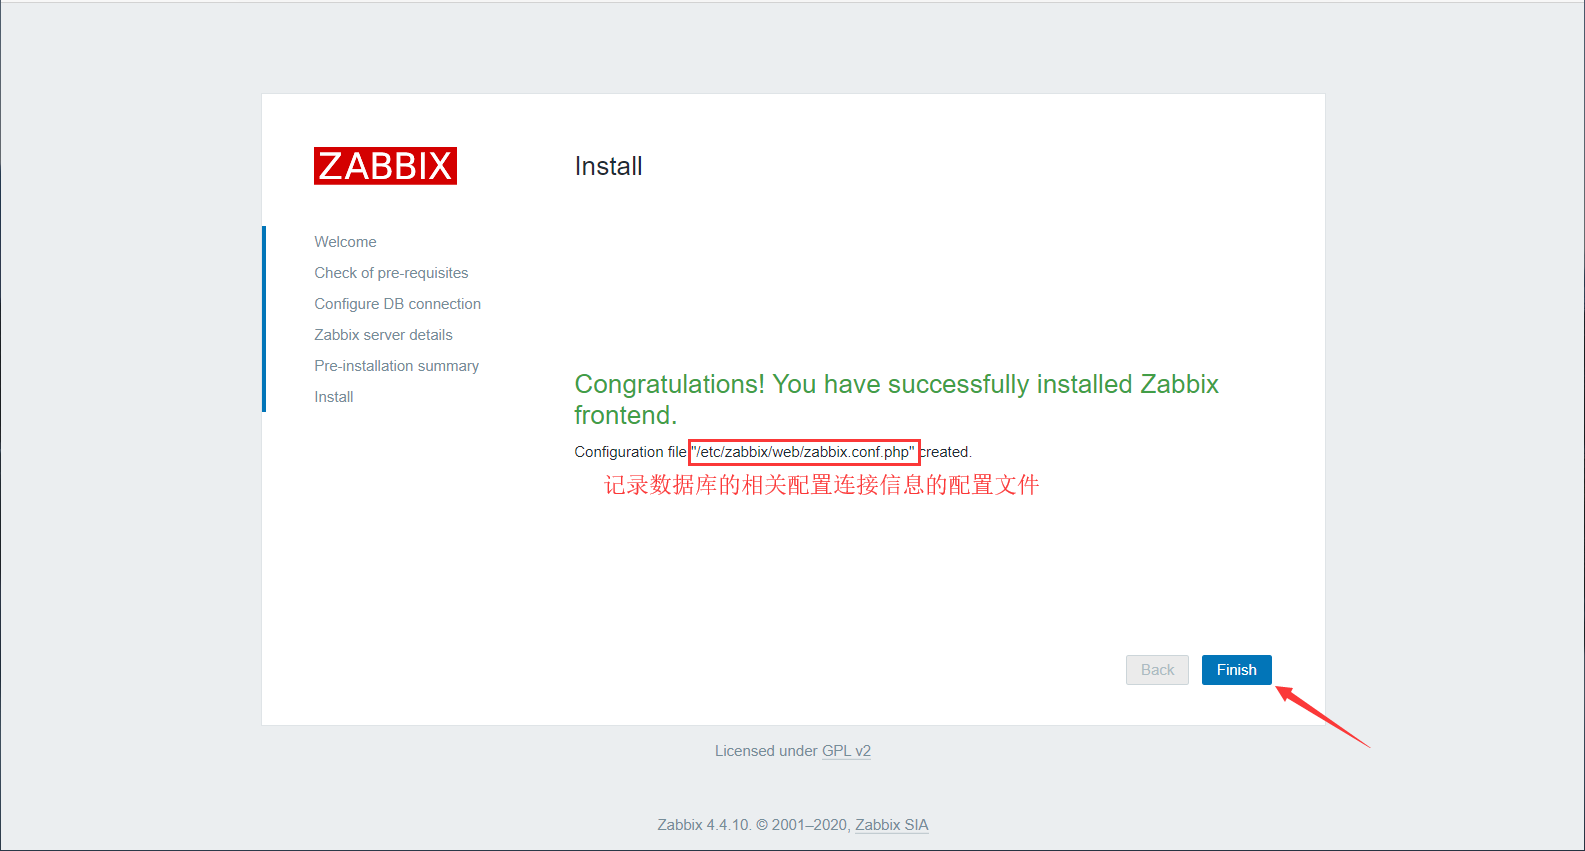 zabbix_install-6.png